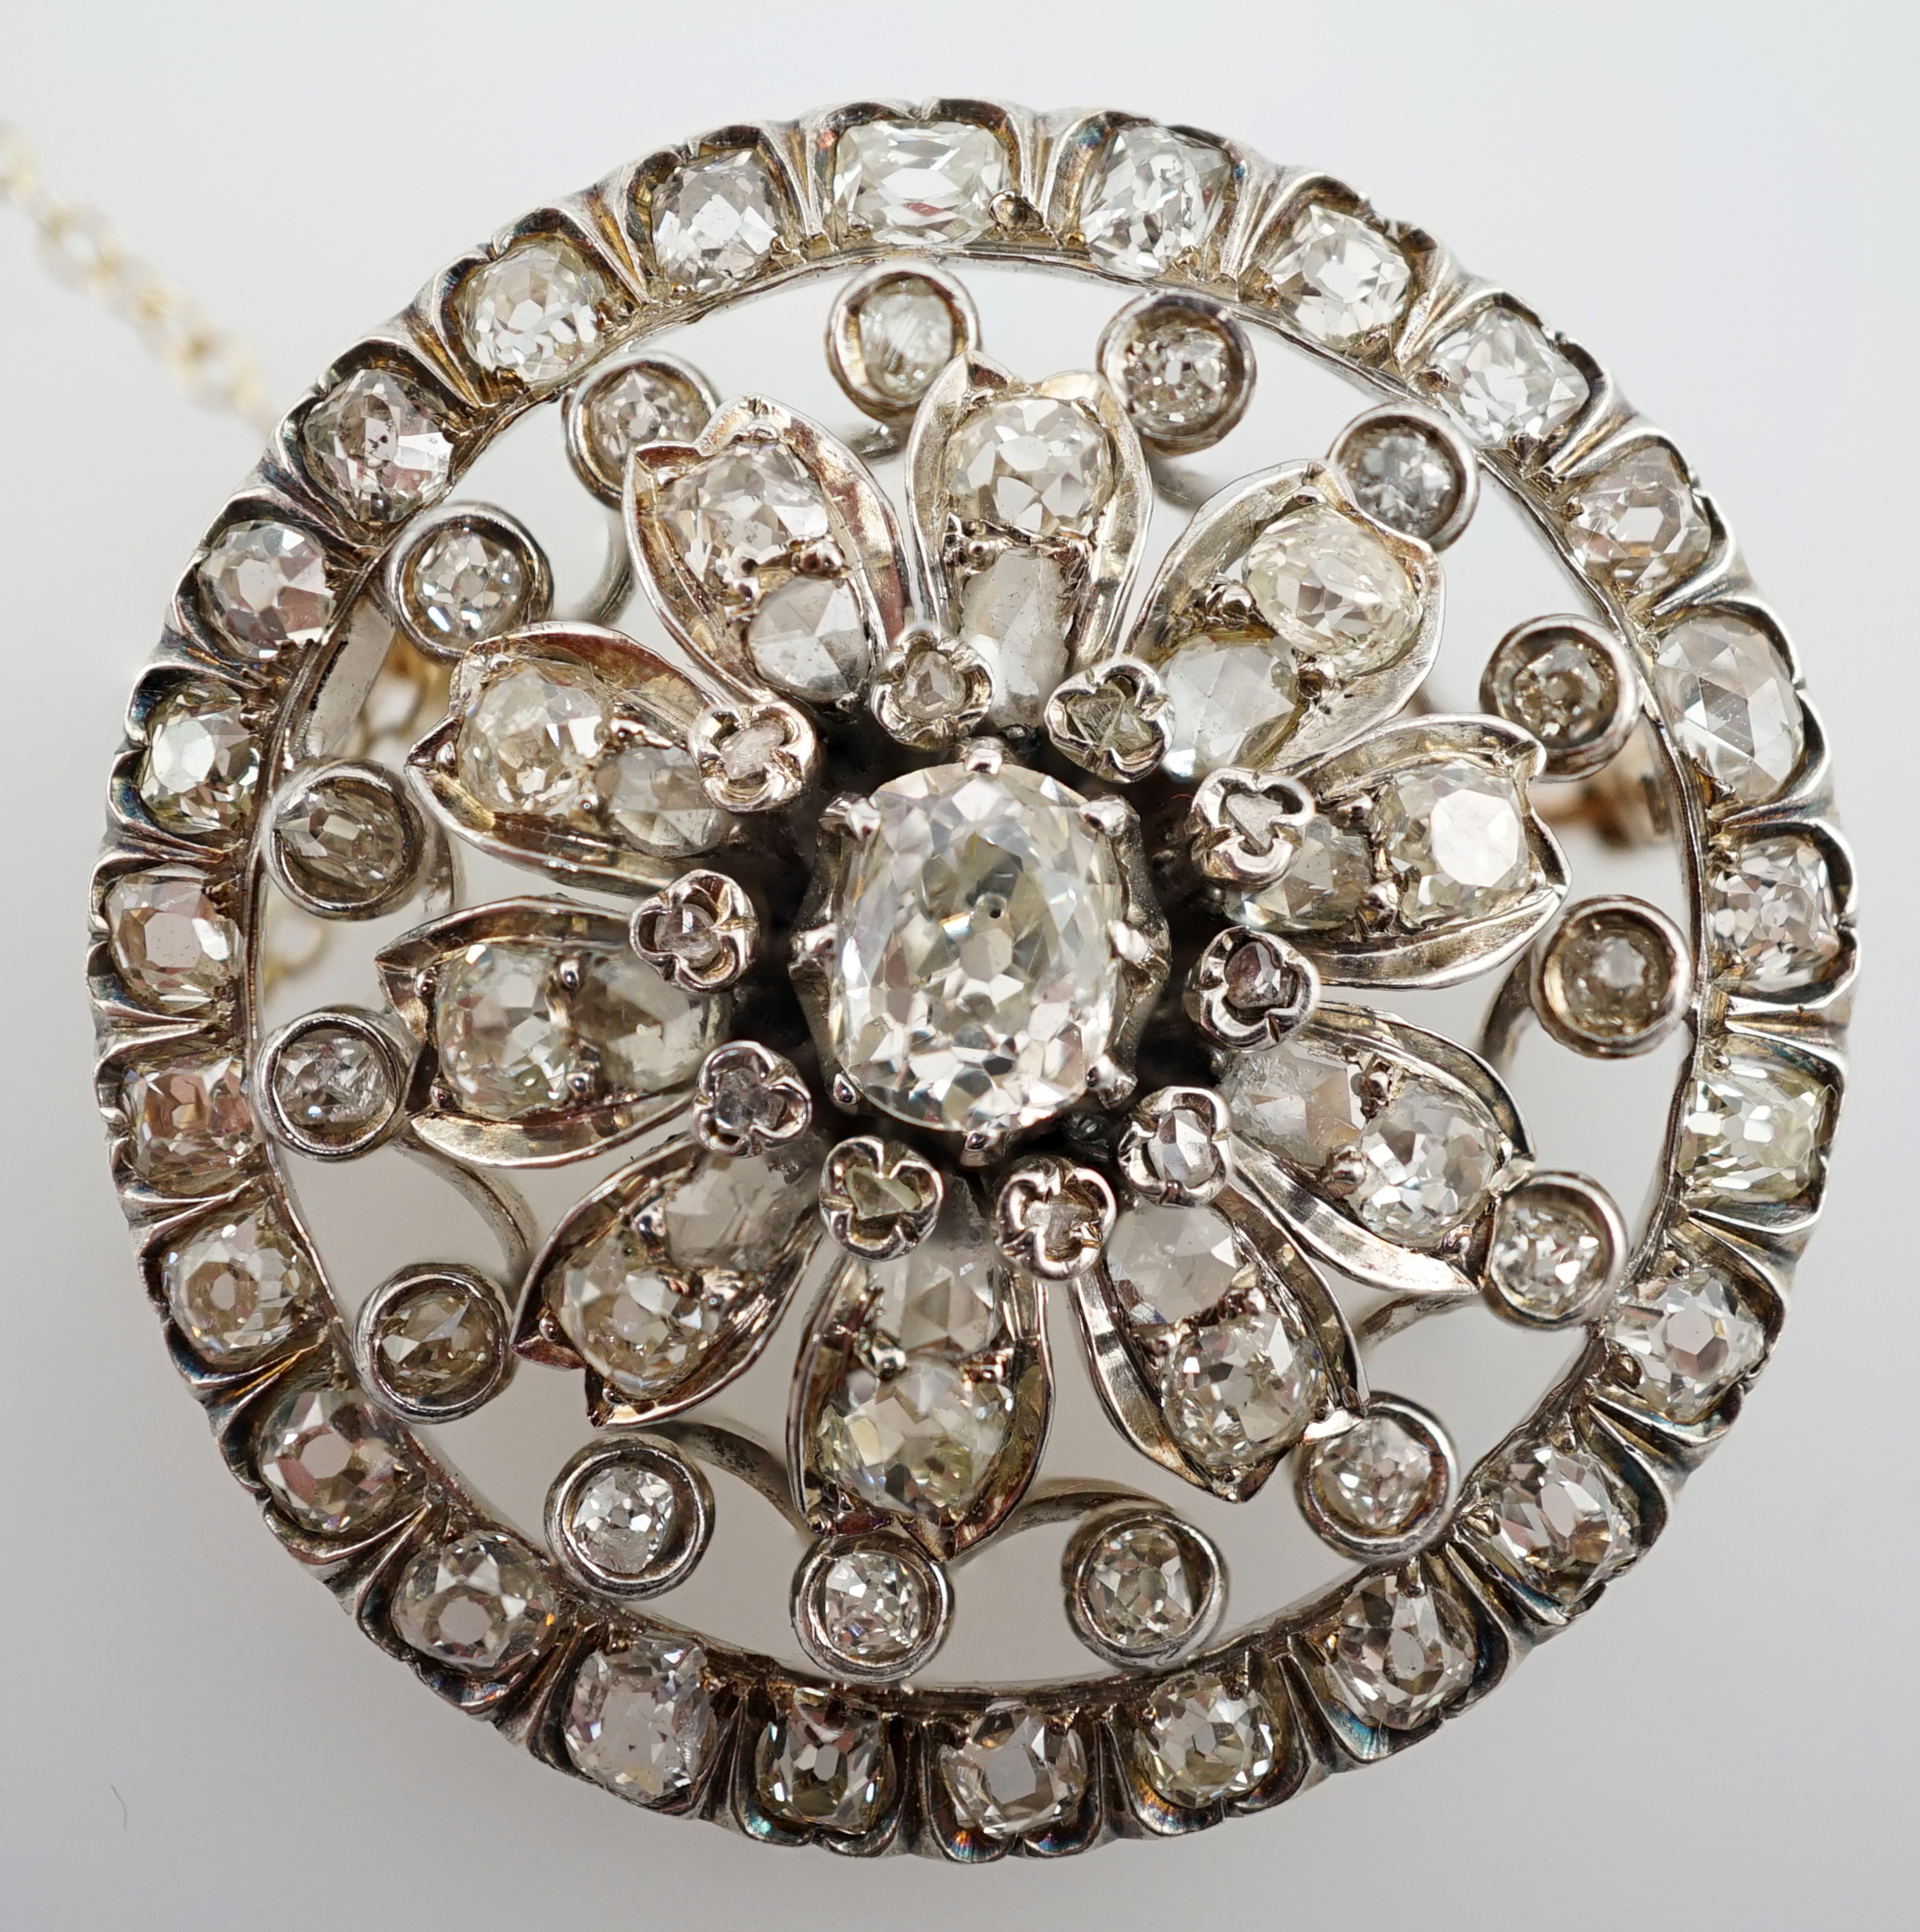 An Edwardian pierced gold and diamond cluster set circular brooch